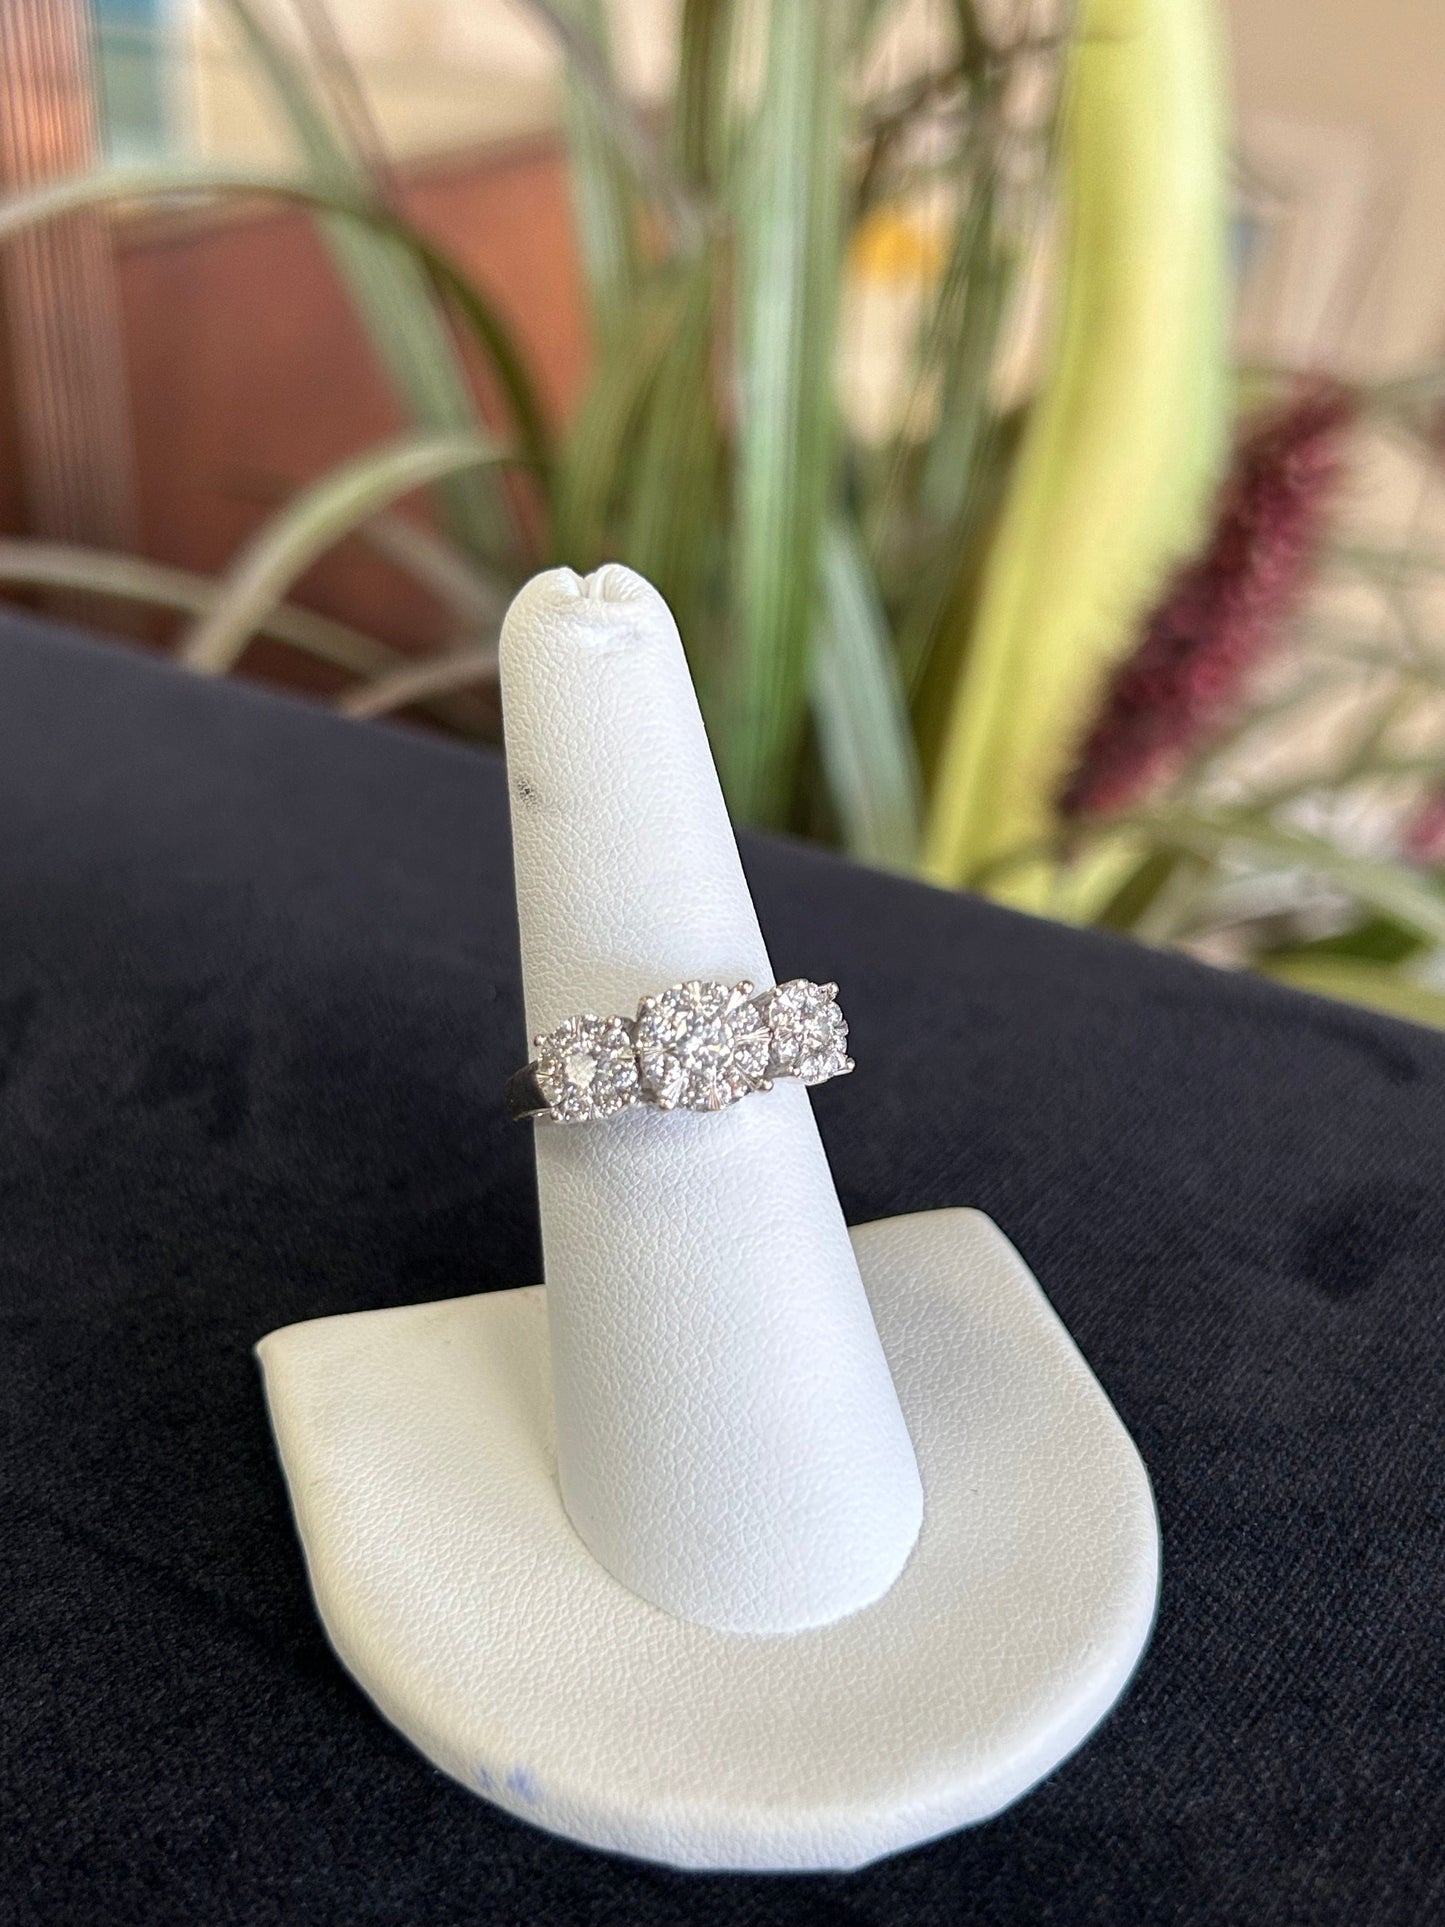 White Gold Three Stone Diamond Ring with Diamond Halo